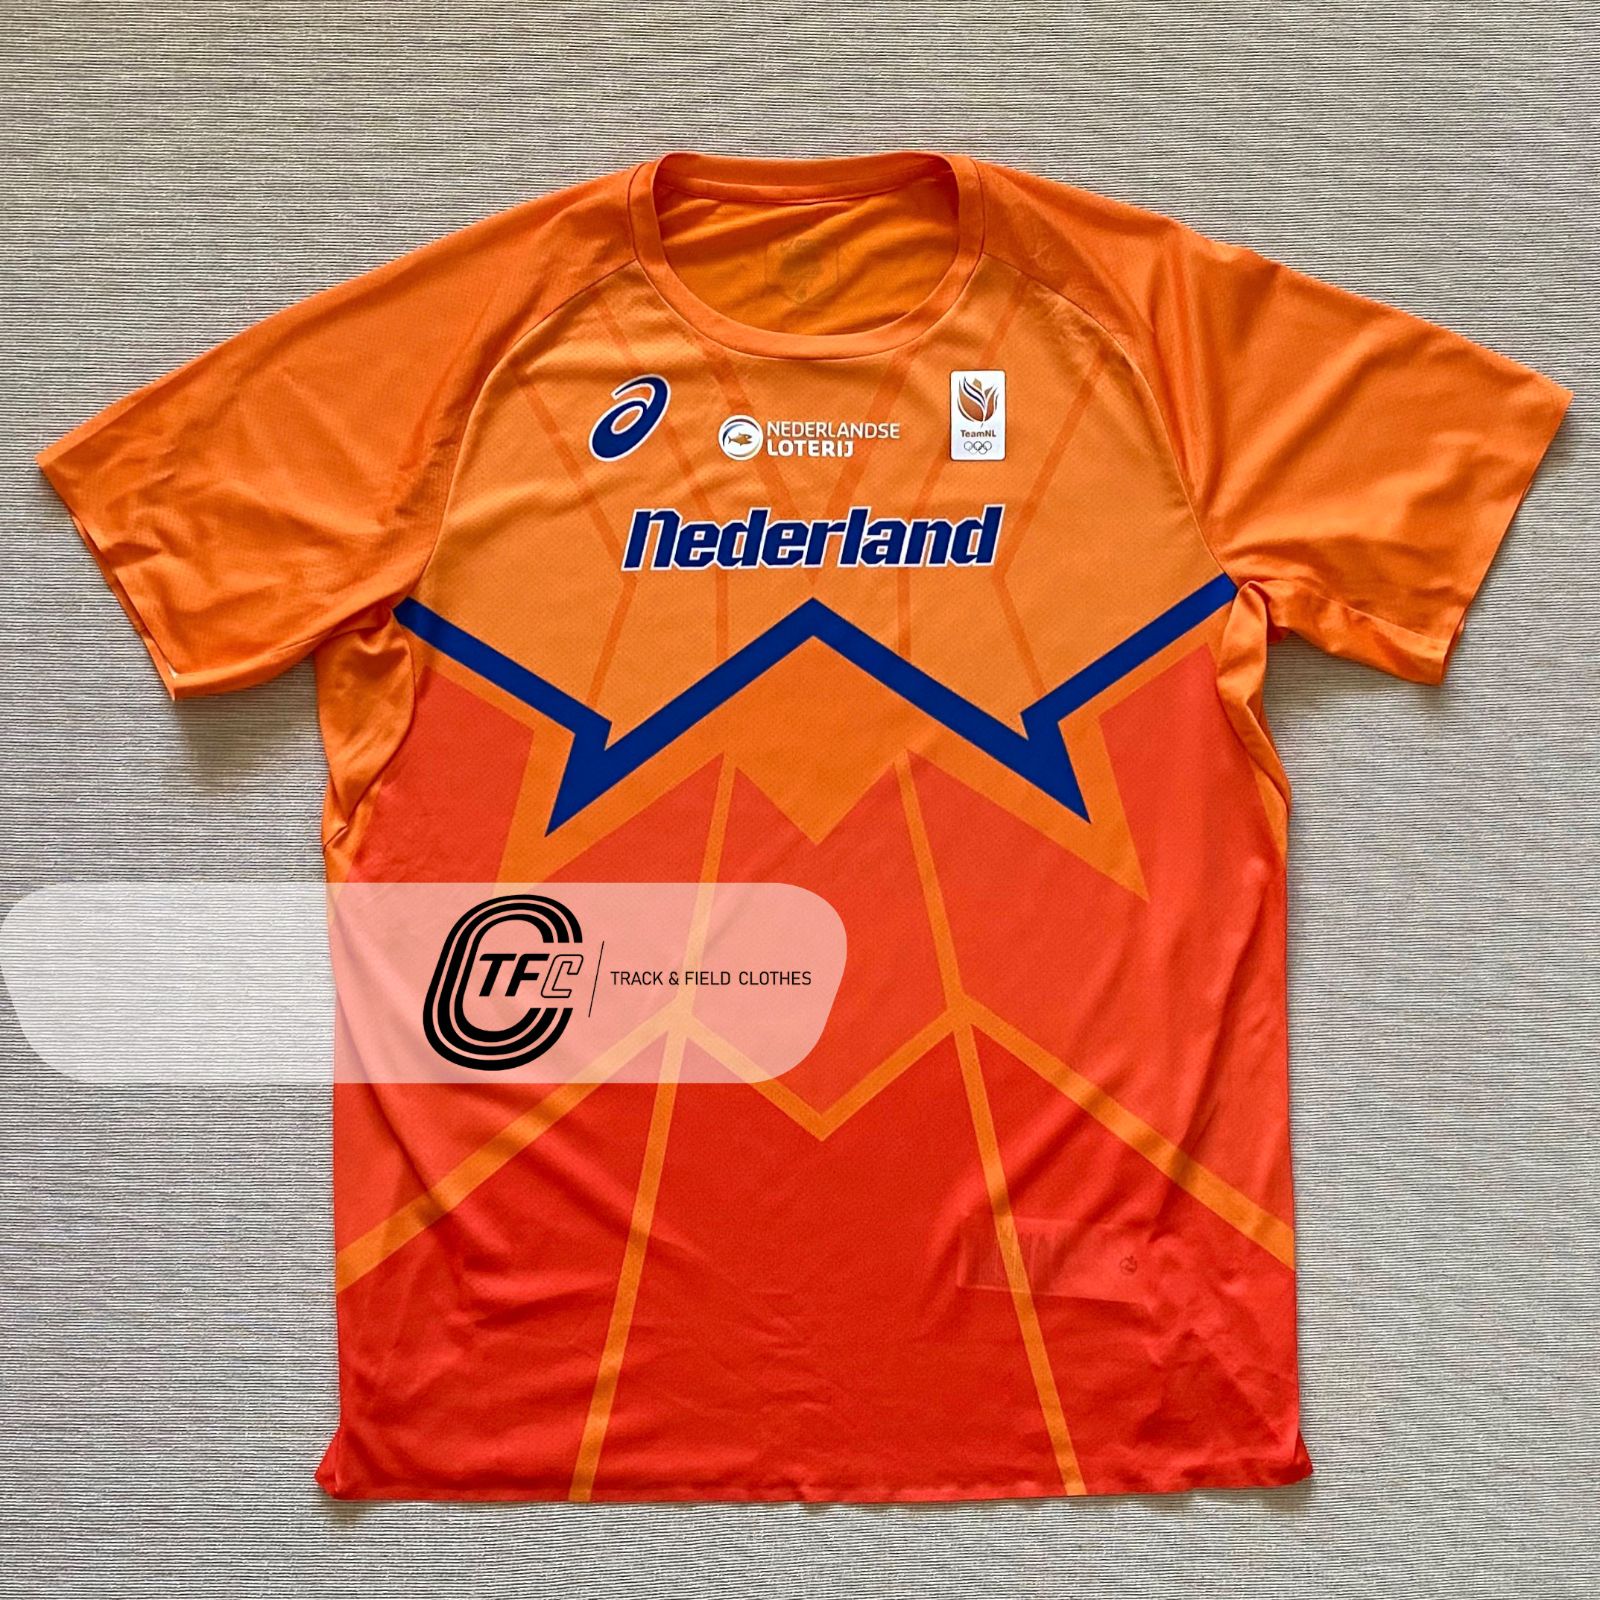 Asics Netherlands International Pro Elite T-Shirt | Trackandfieldclothes